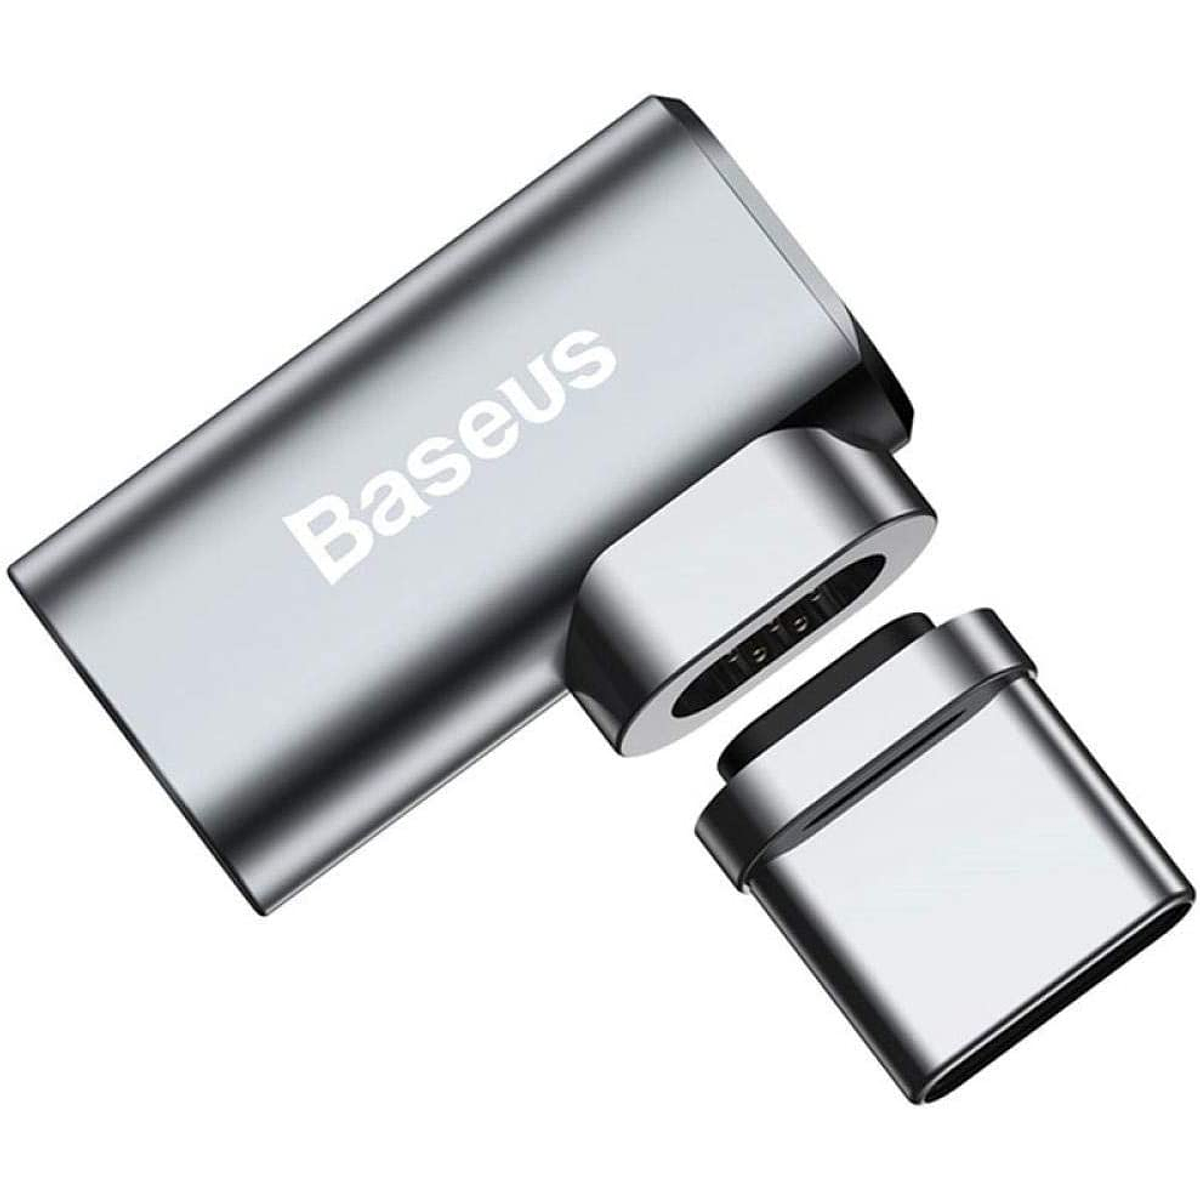 Baseus Mini Magnetic Type-C Elbow Adapter Converter Gray